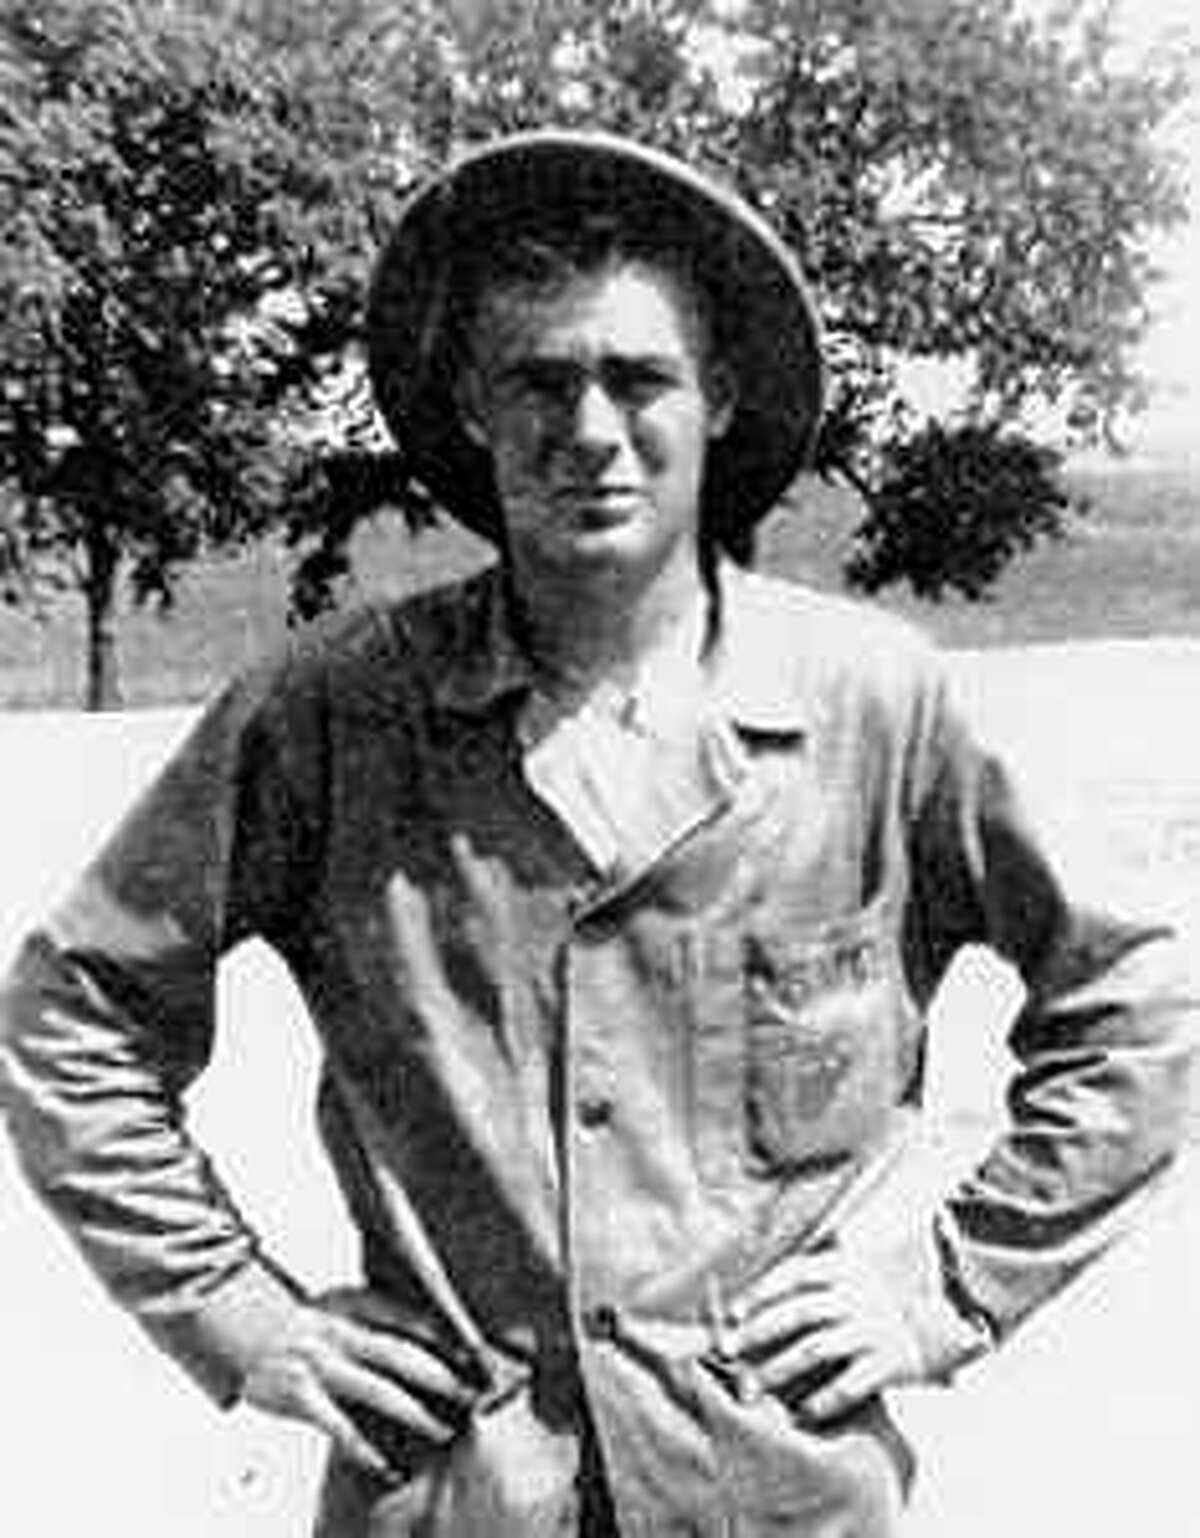 Pfc. John W. Martin, who went missing near the Chosin Reservoir in North Korea in December 1950.